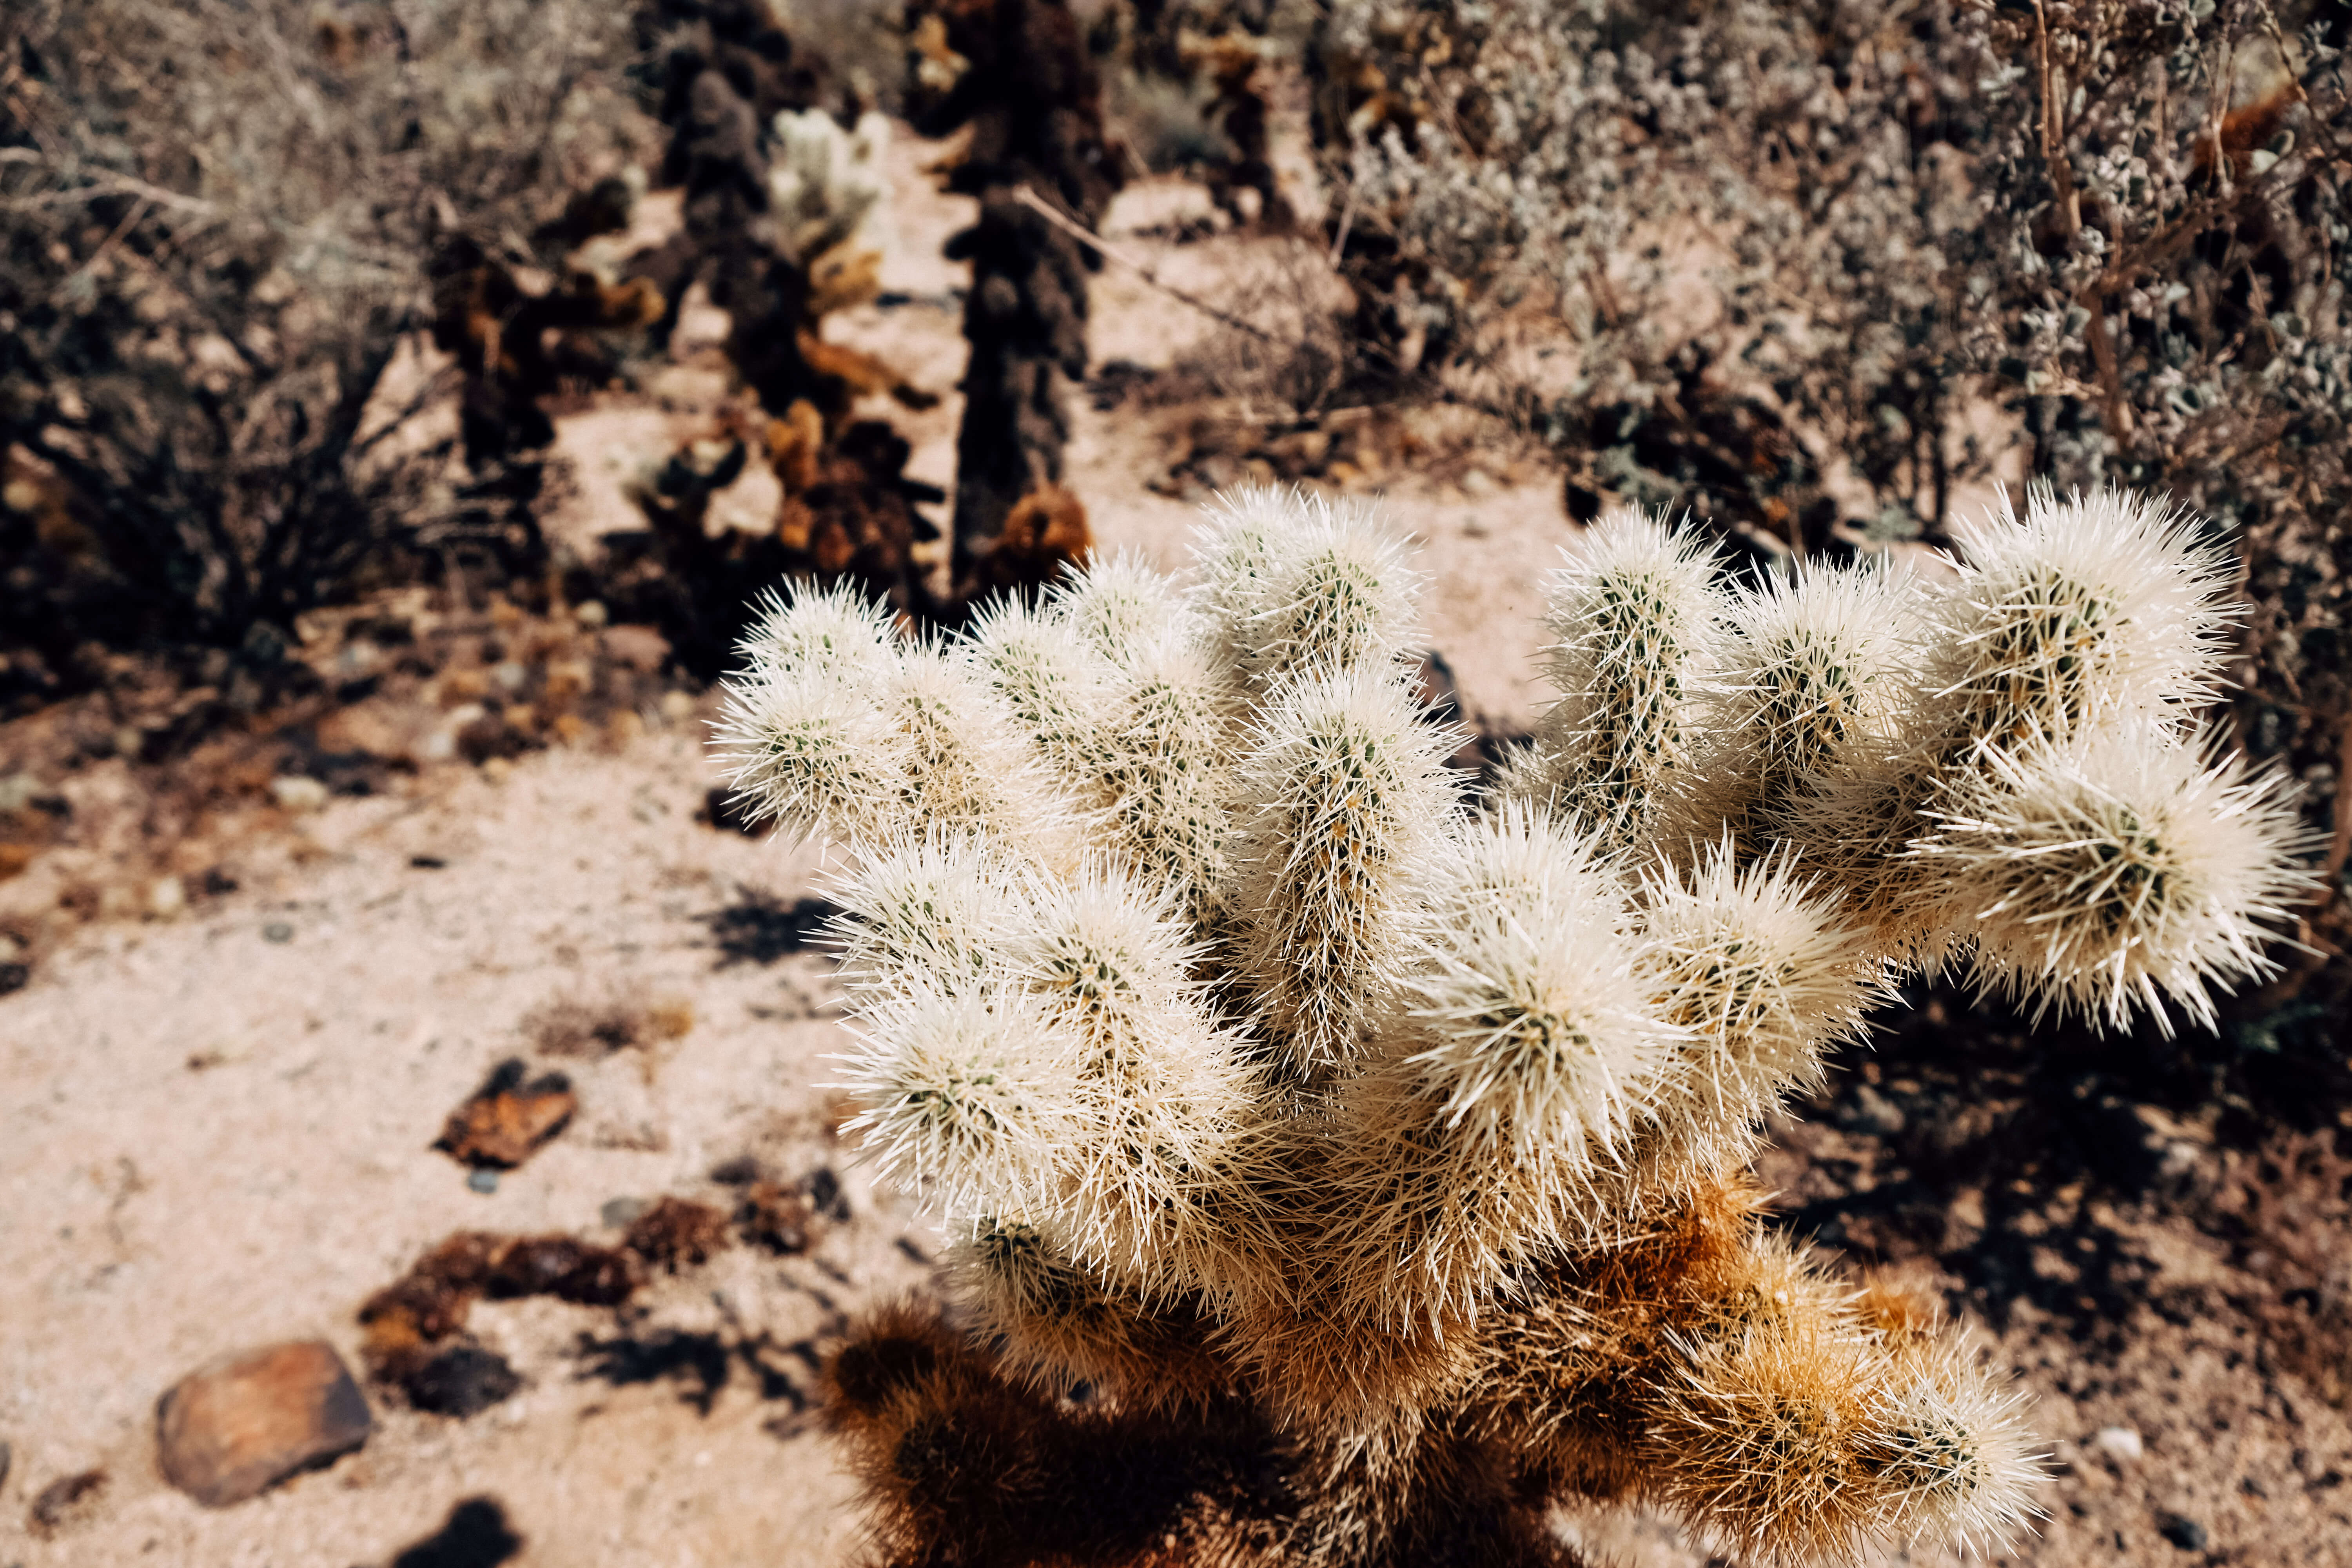 Cholla Cactus up close